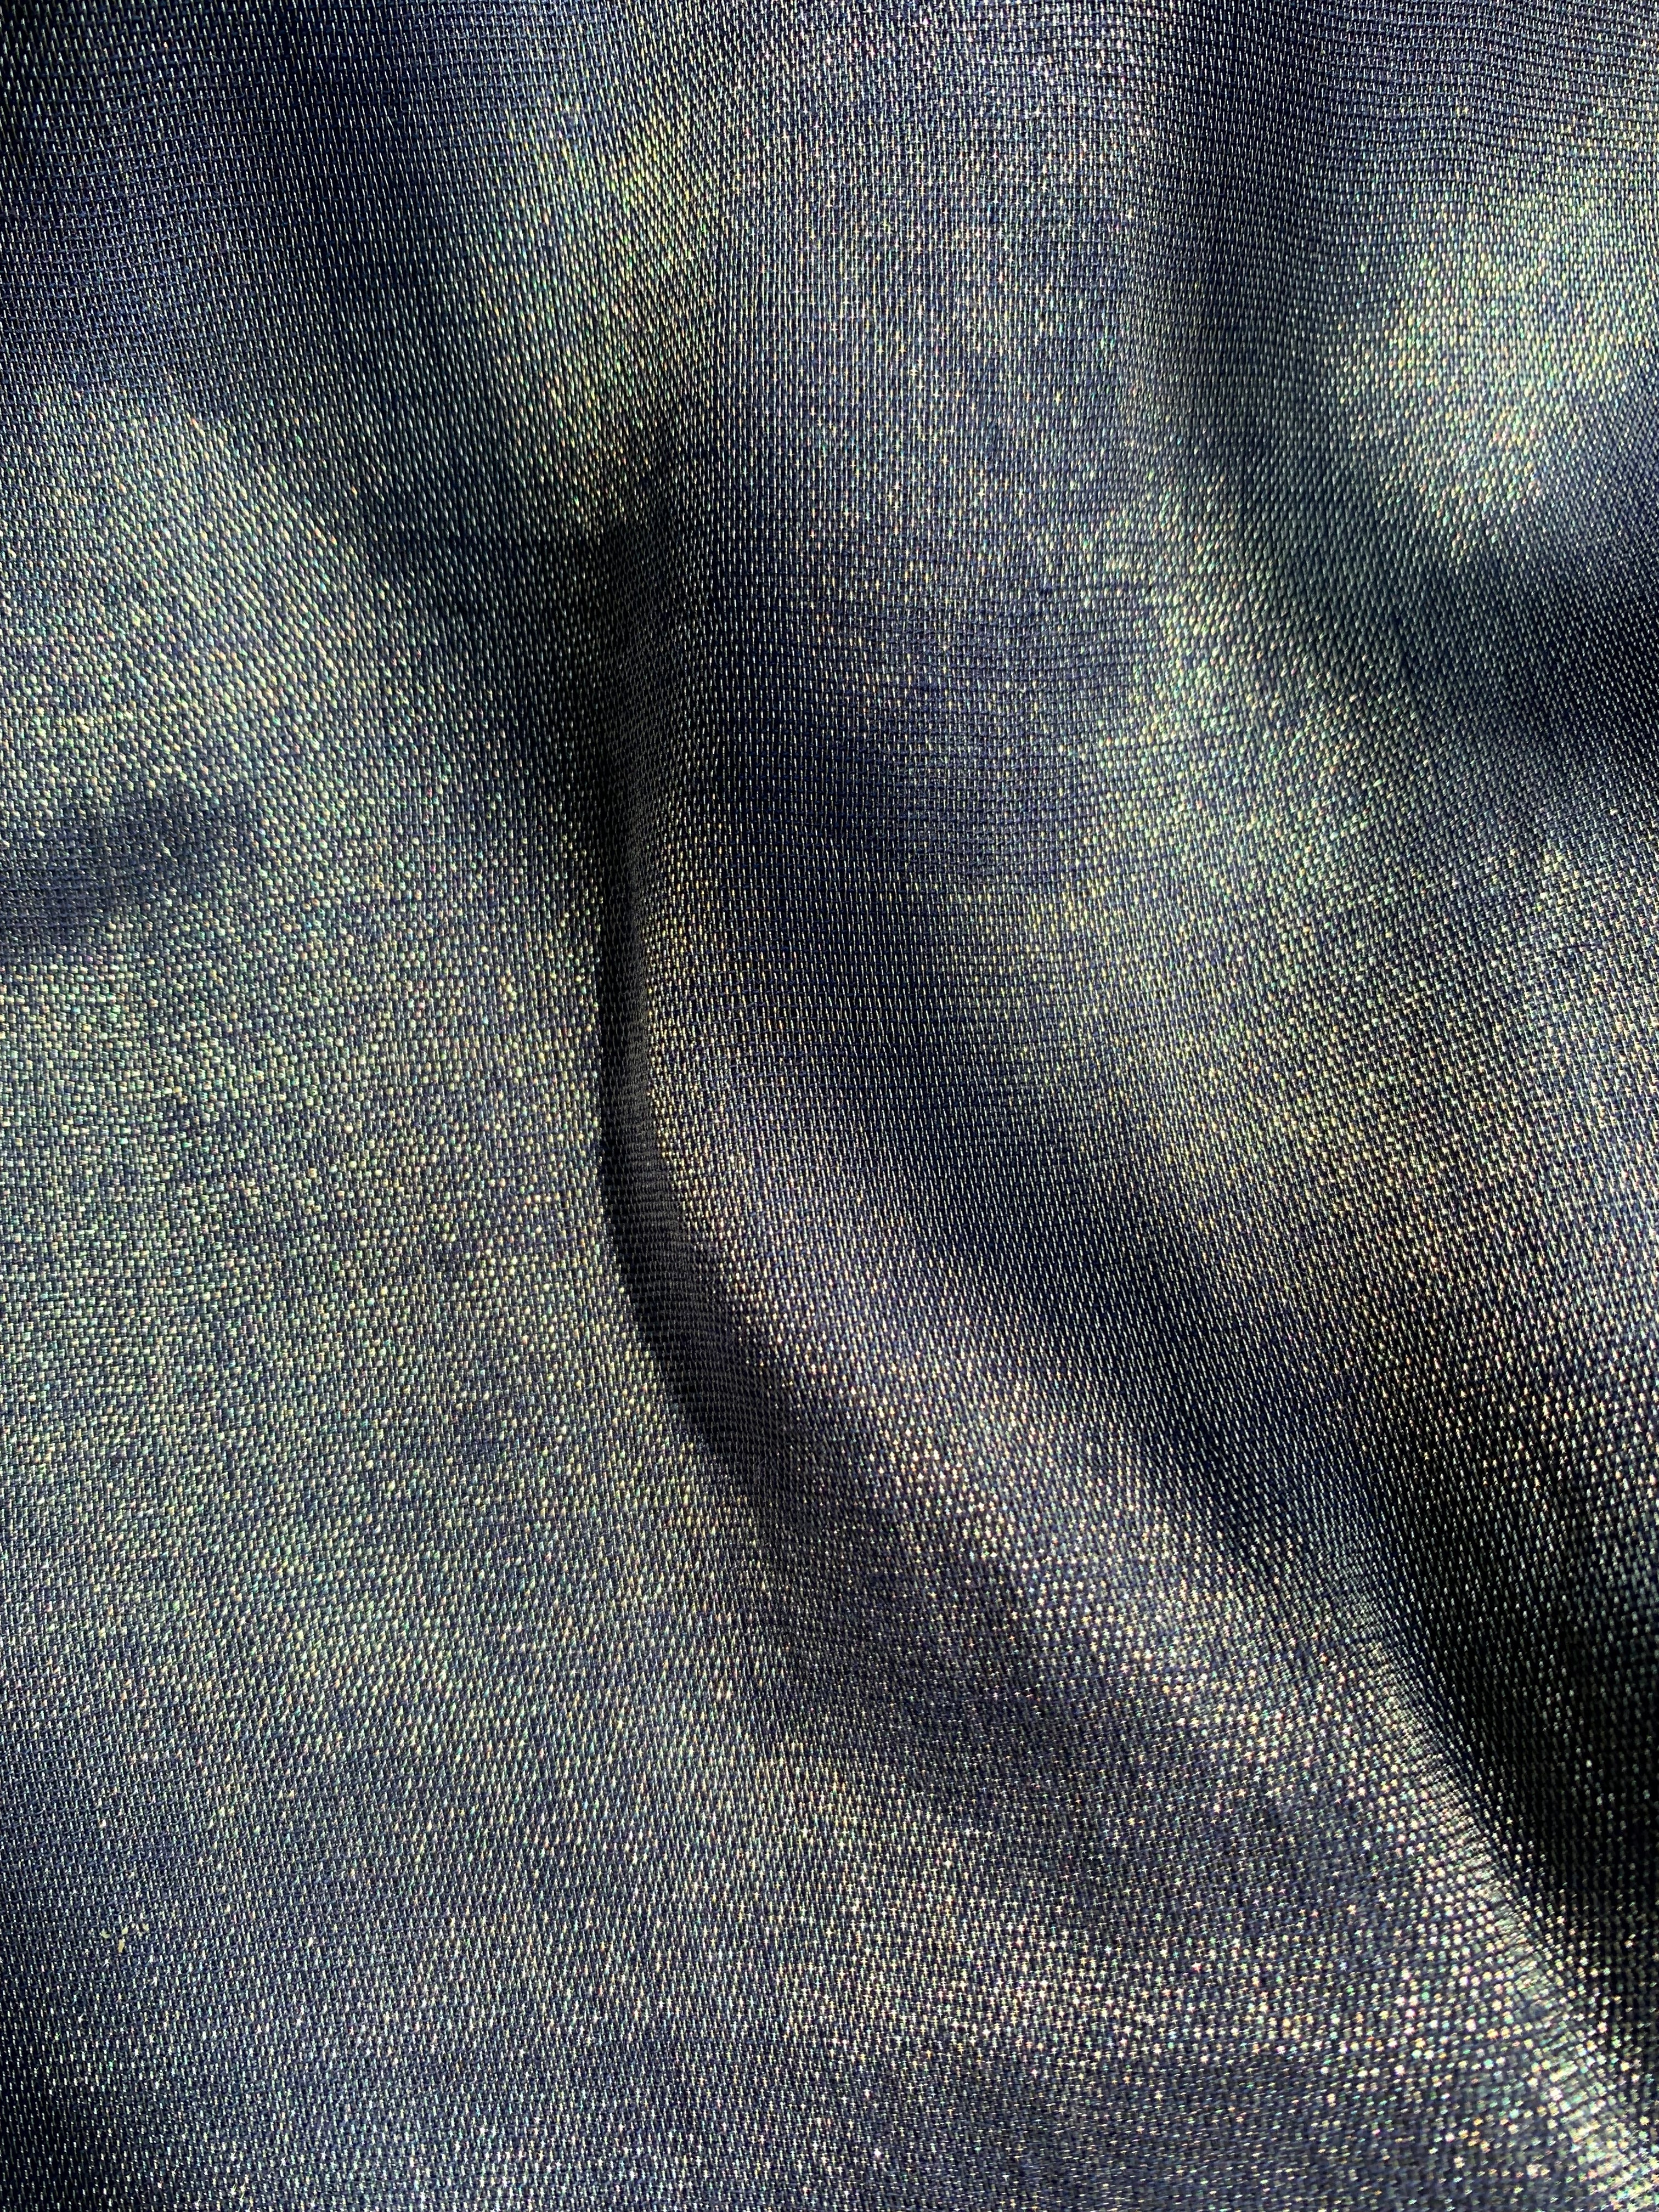 Midnight blue tissue handwoven fabric